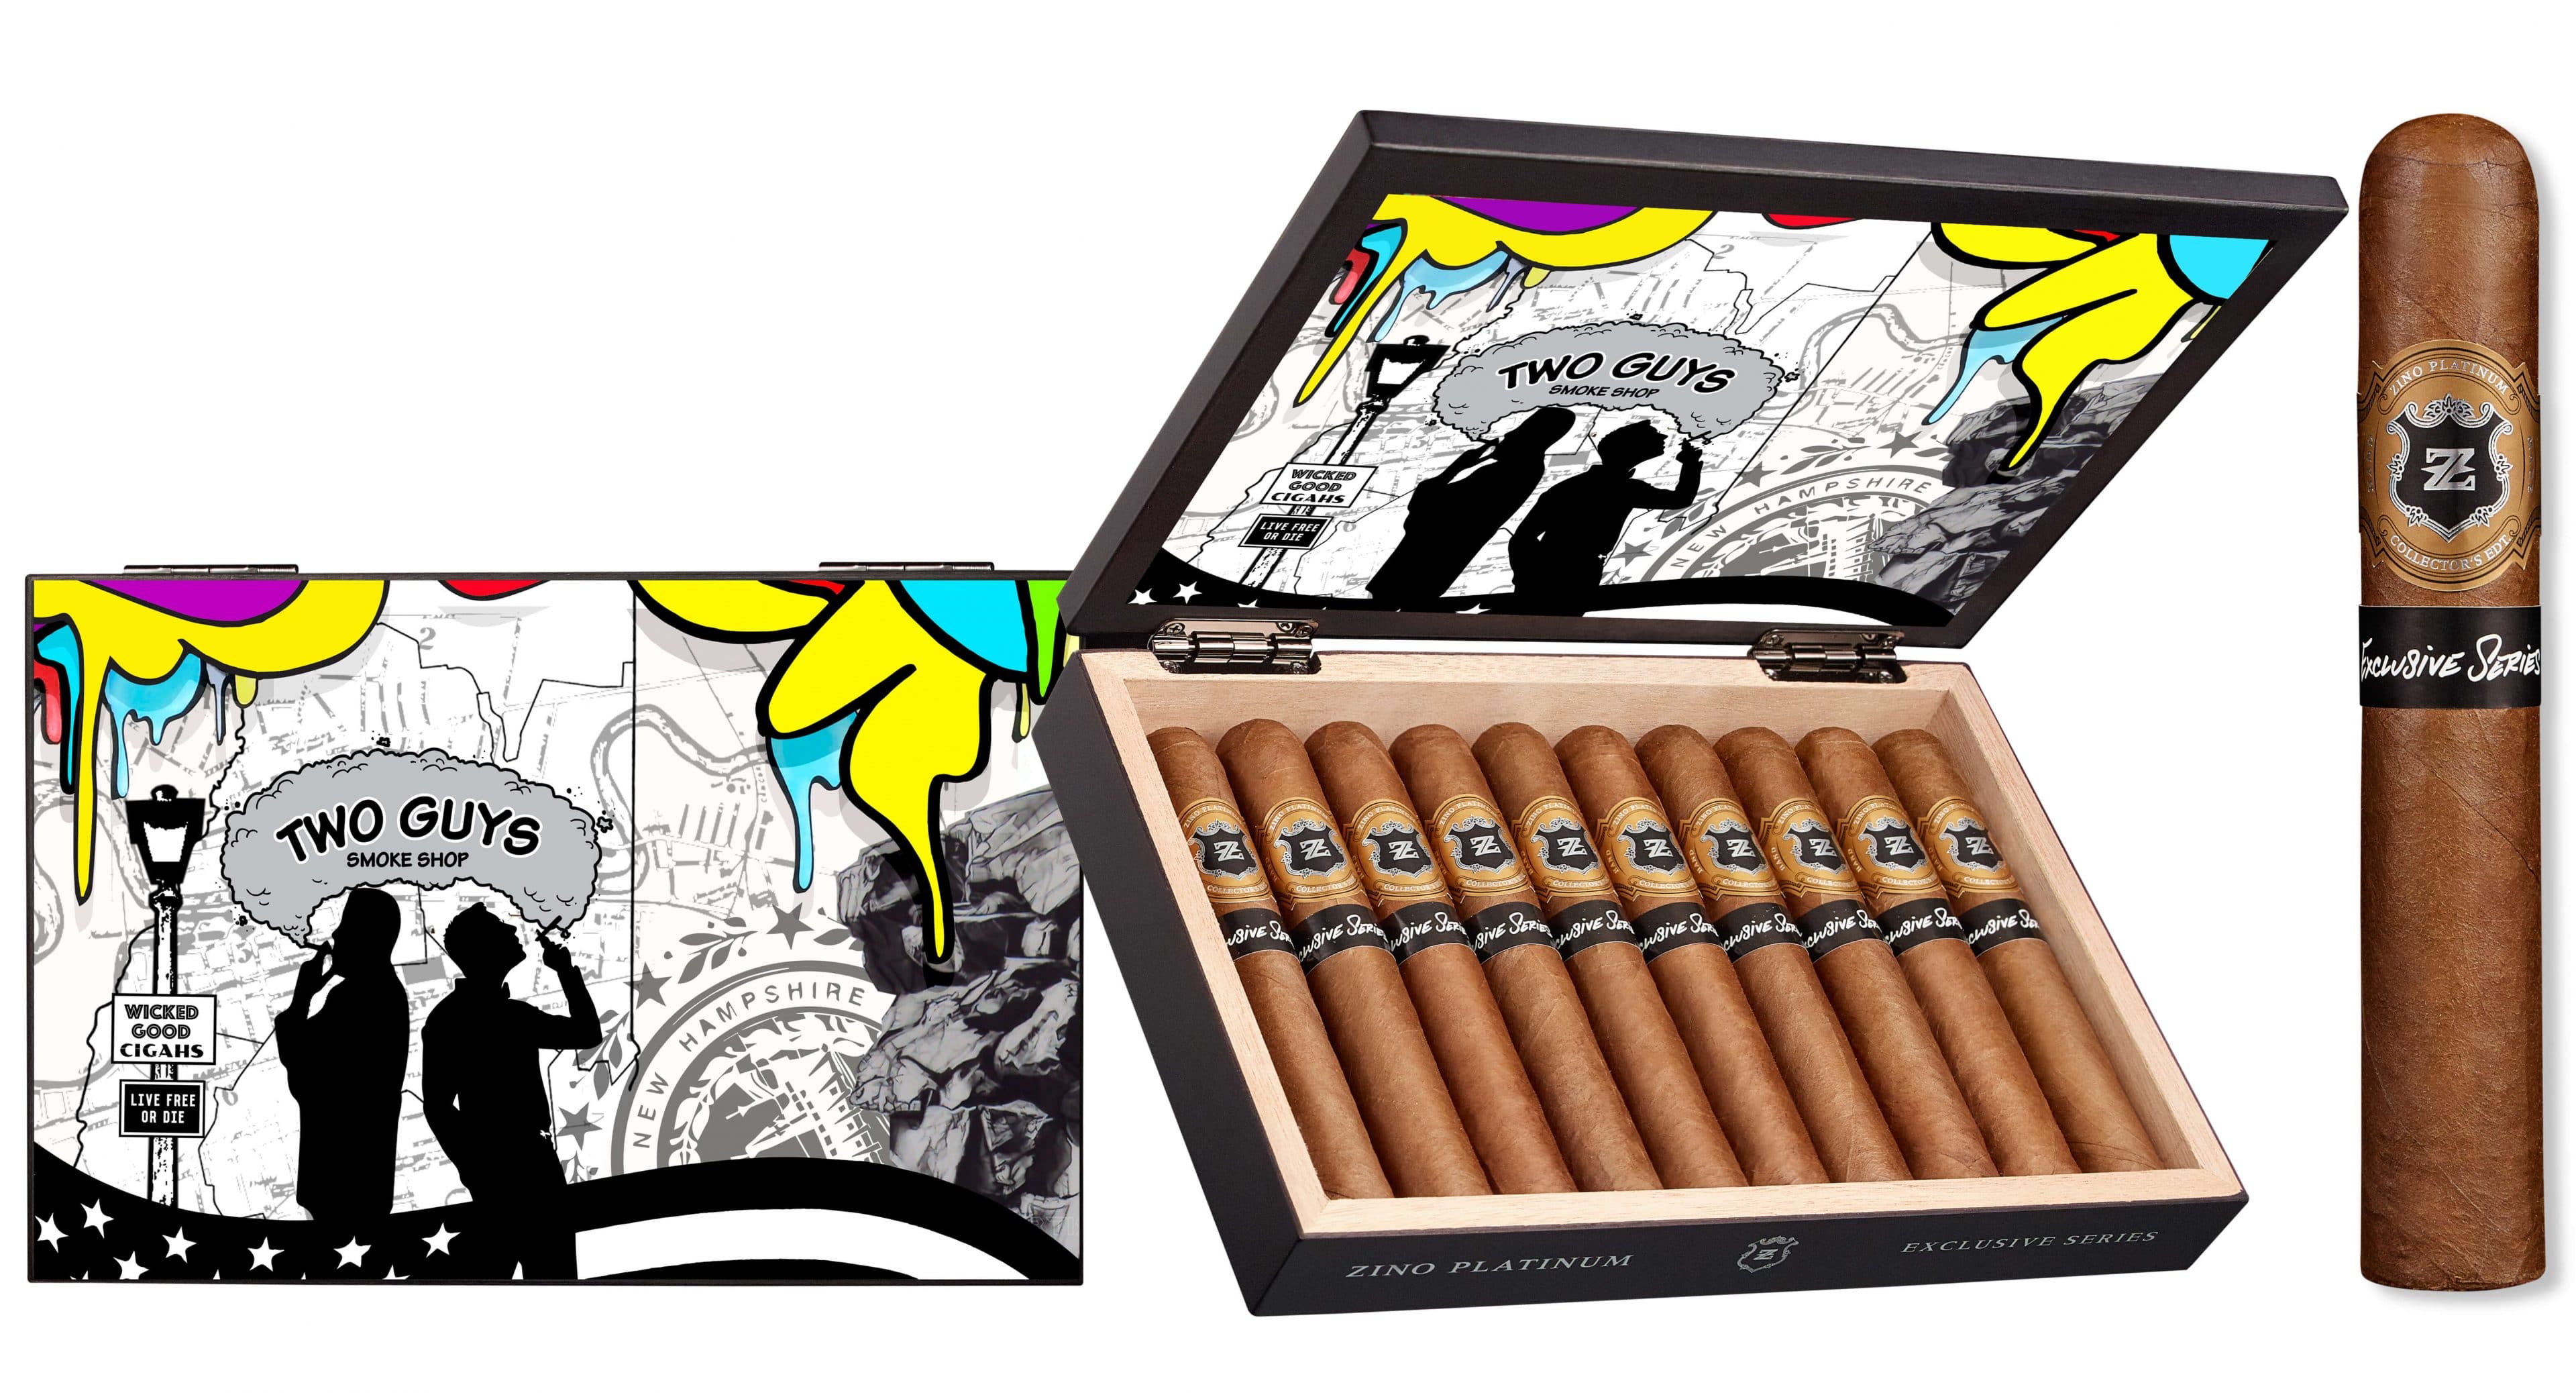 Cigar News: Two Guys Smoke Shop Announces Zino Platinum Exclusive Series